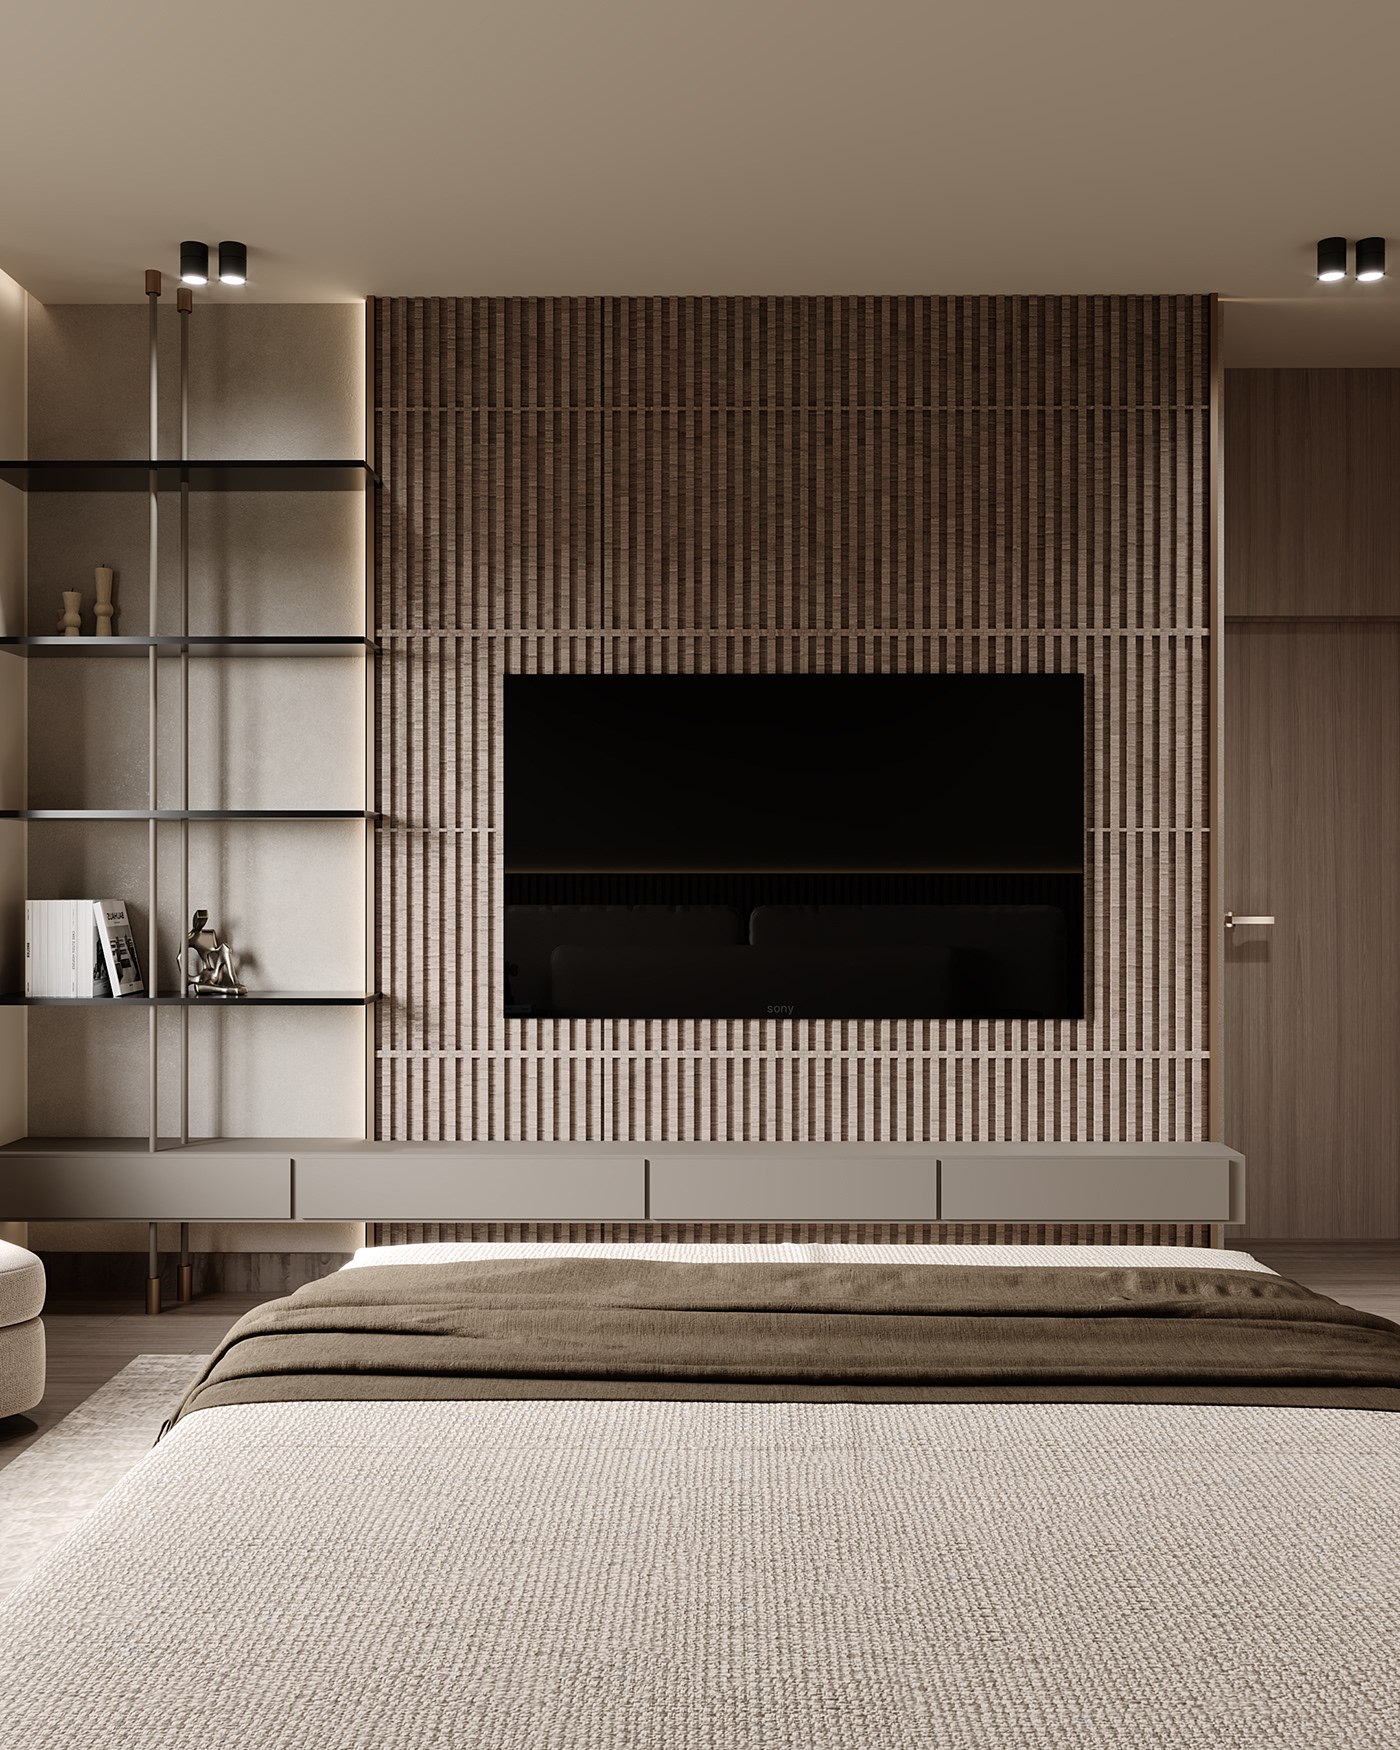 master bedroom interior design  architecture modern Masterbedroom  Interior design